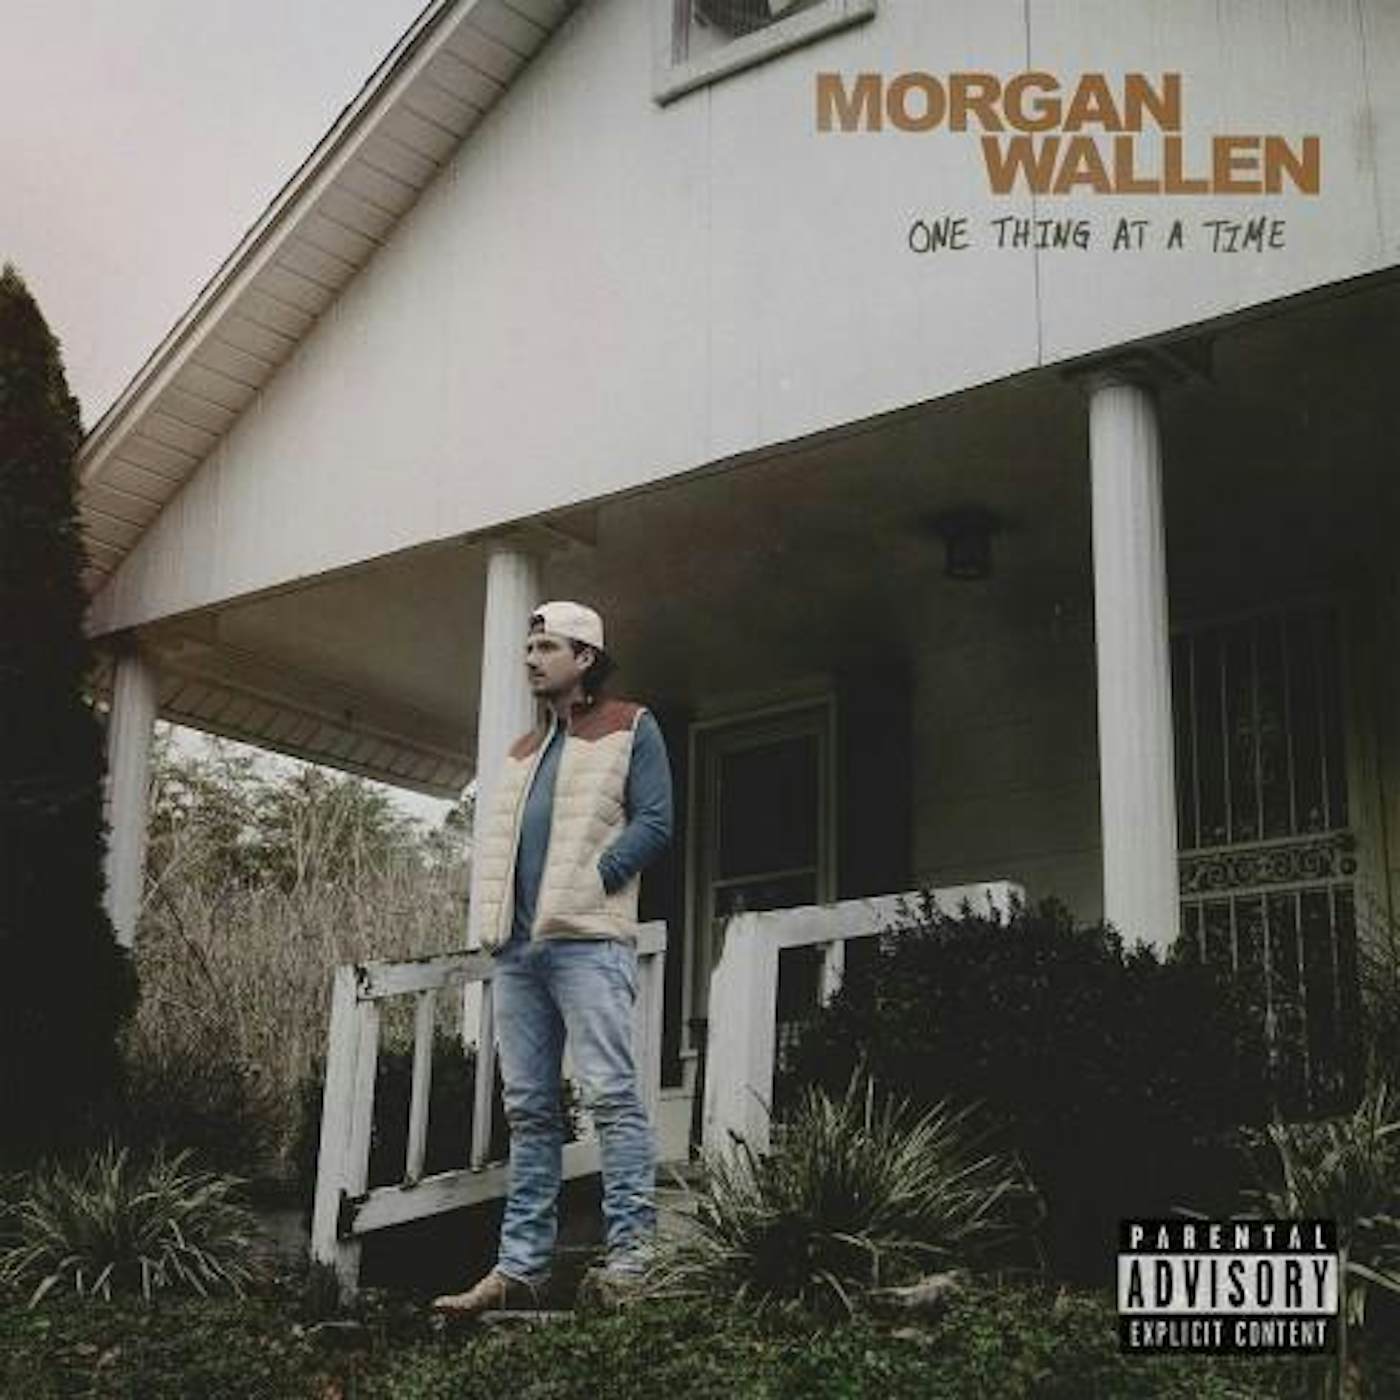 Morgan Wallen ONE THING AT A TIME 3LP Vinyl Record Set